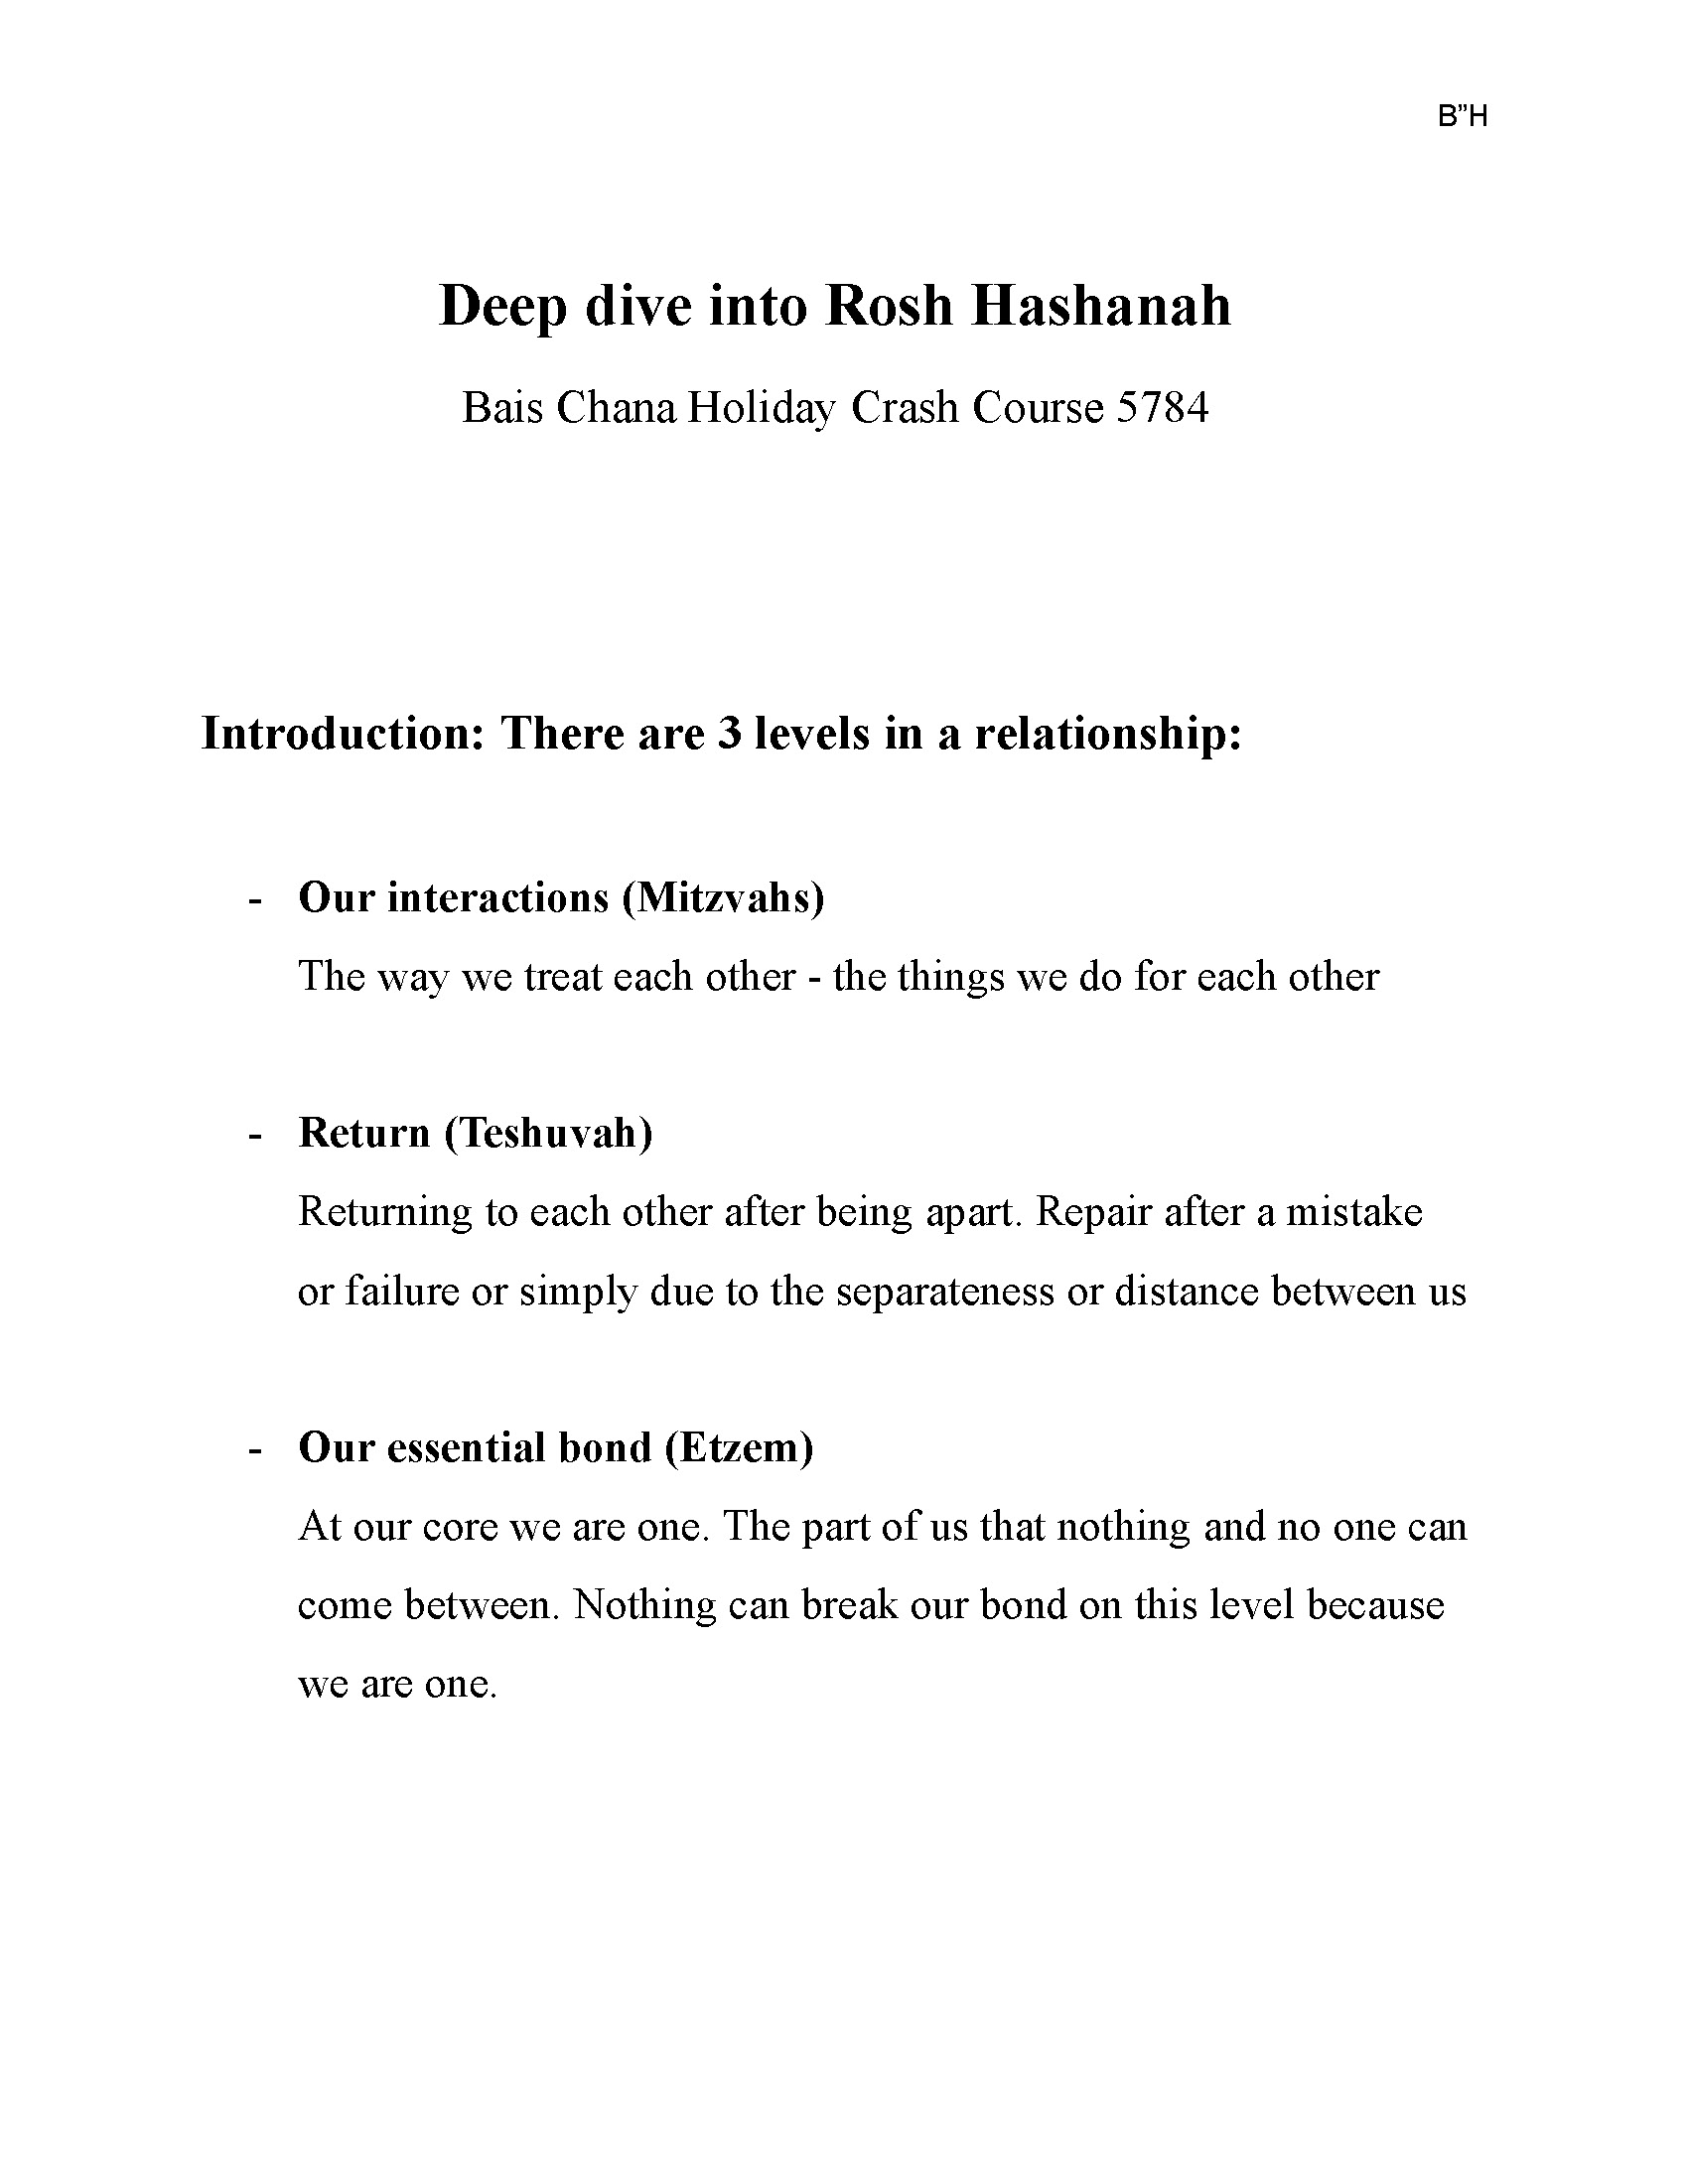 Deep Dive - Rosh Hashanah 5784_Page_1